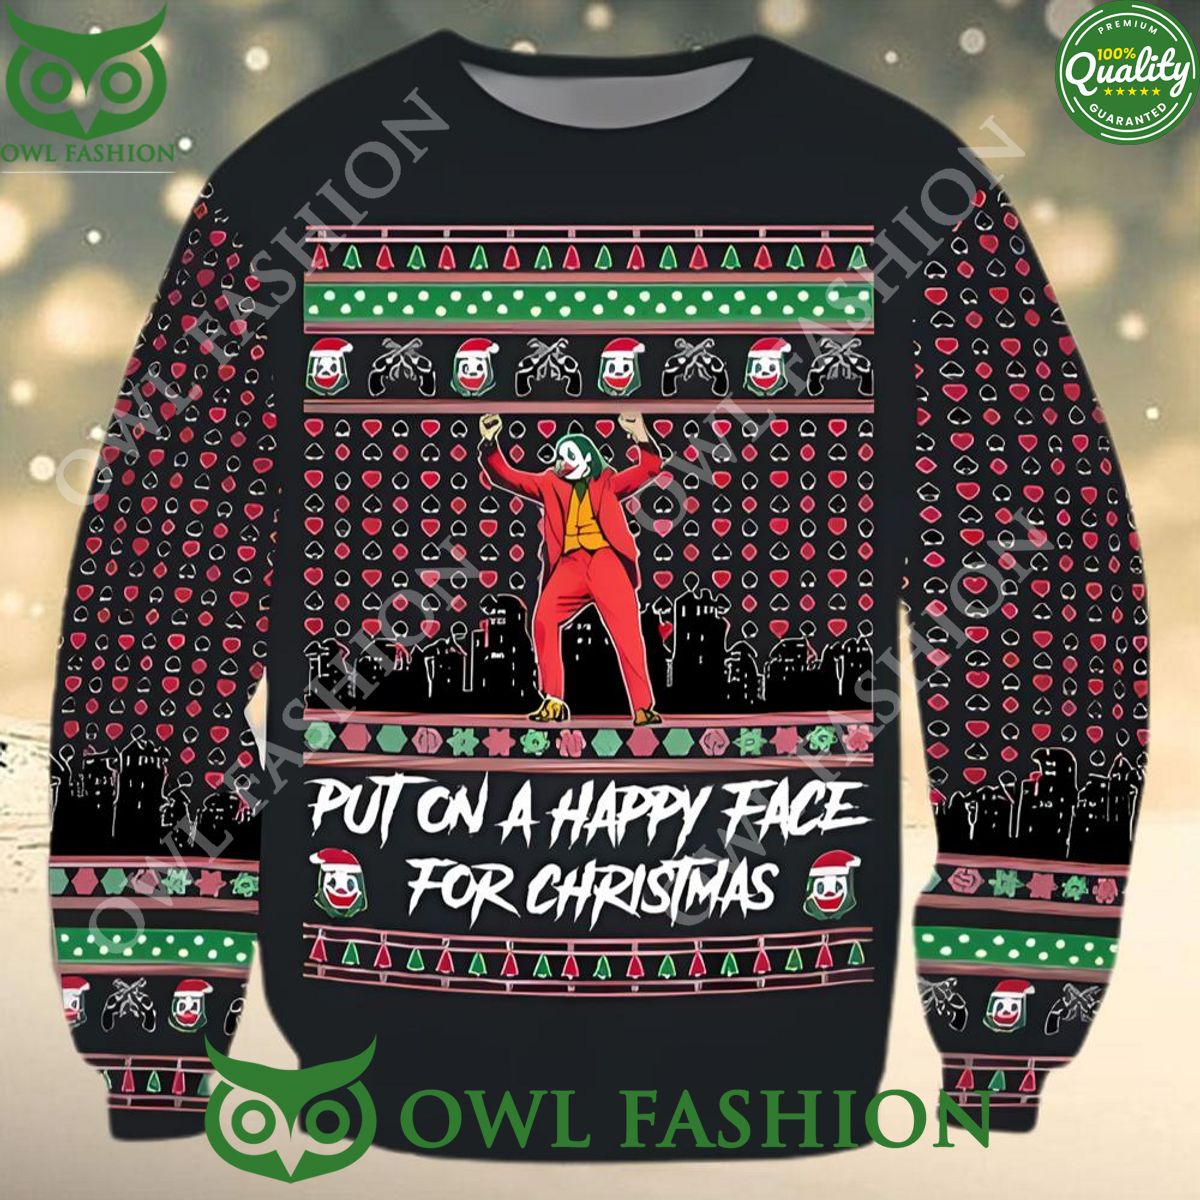 joker put on a happy face for christmas sweater jumper black 1 88esa.jpg